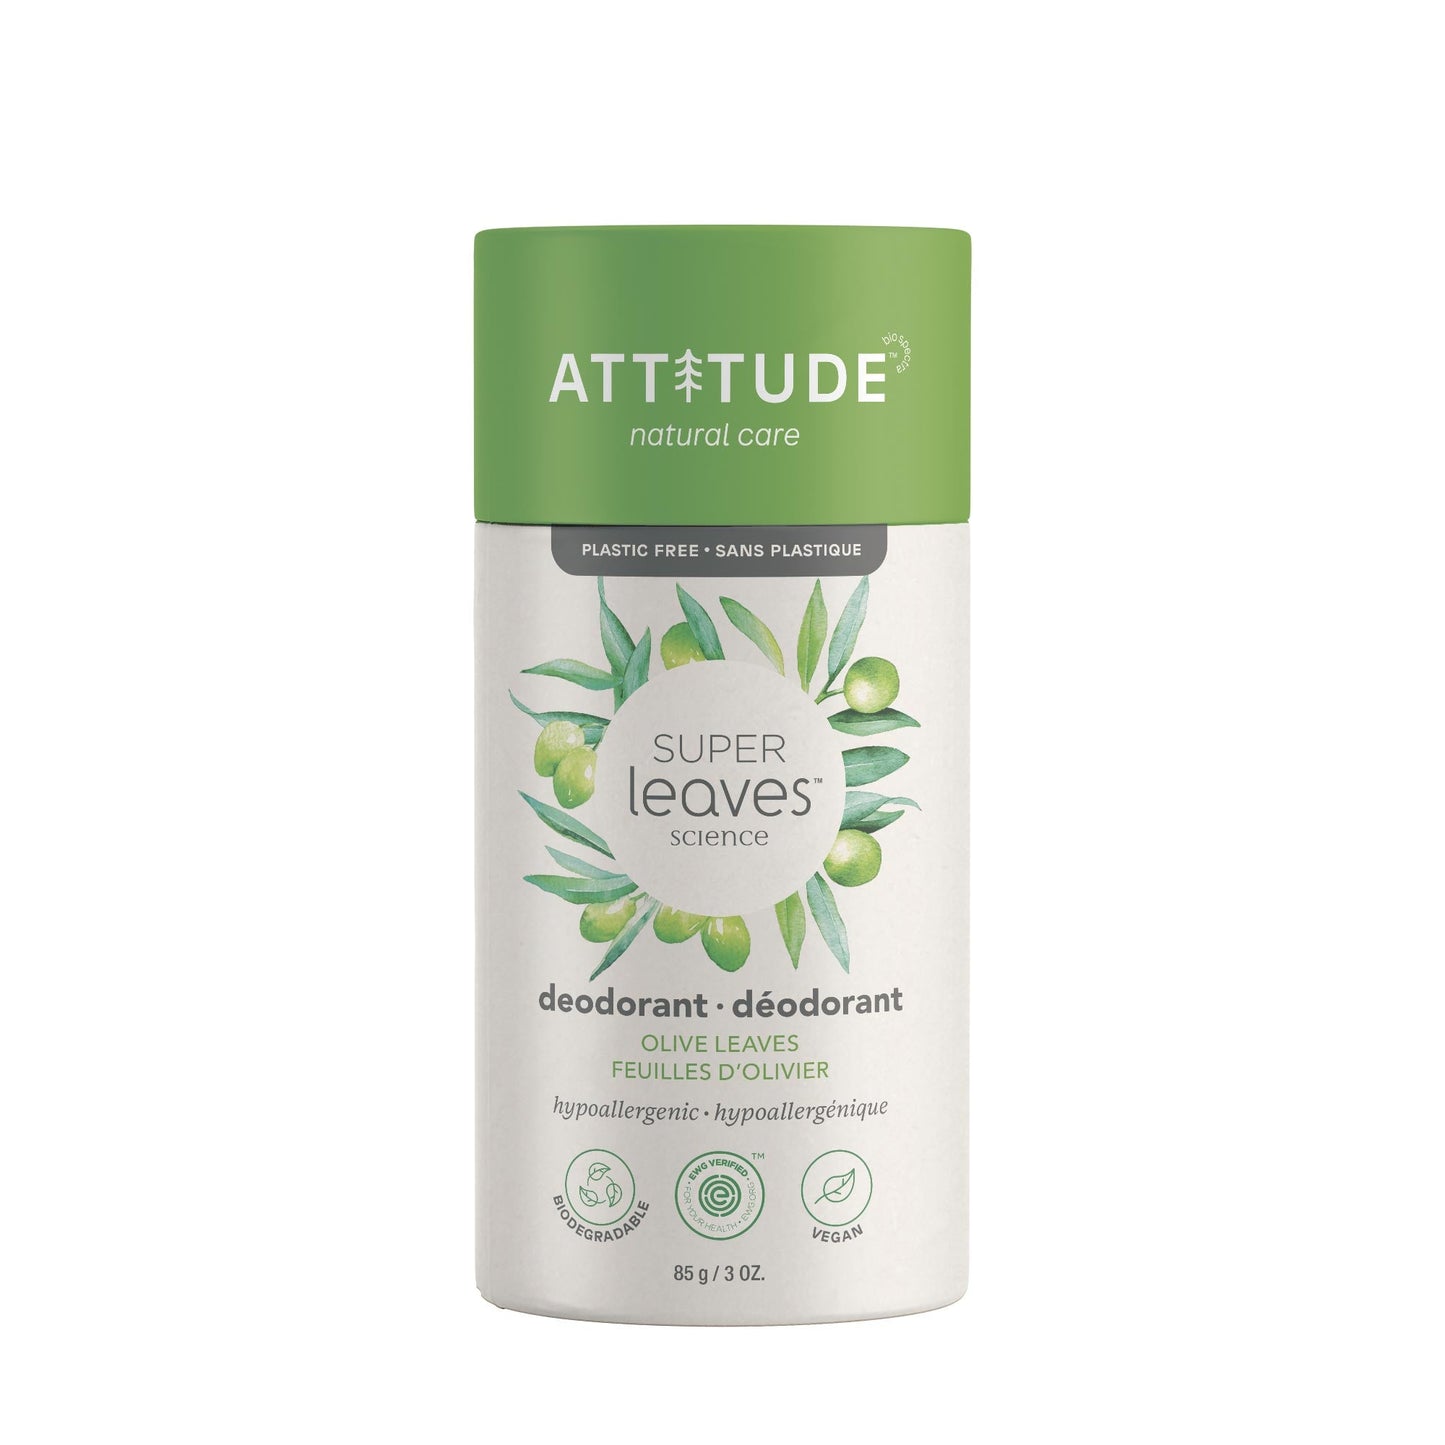 ATTITUDE Super leaves Biodegredable Deodorant Olive Leaves _en?